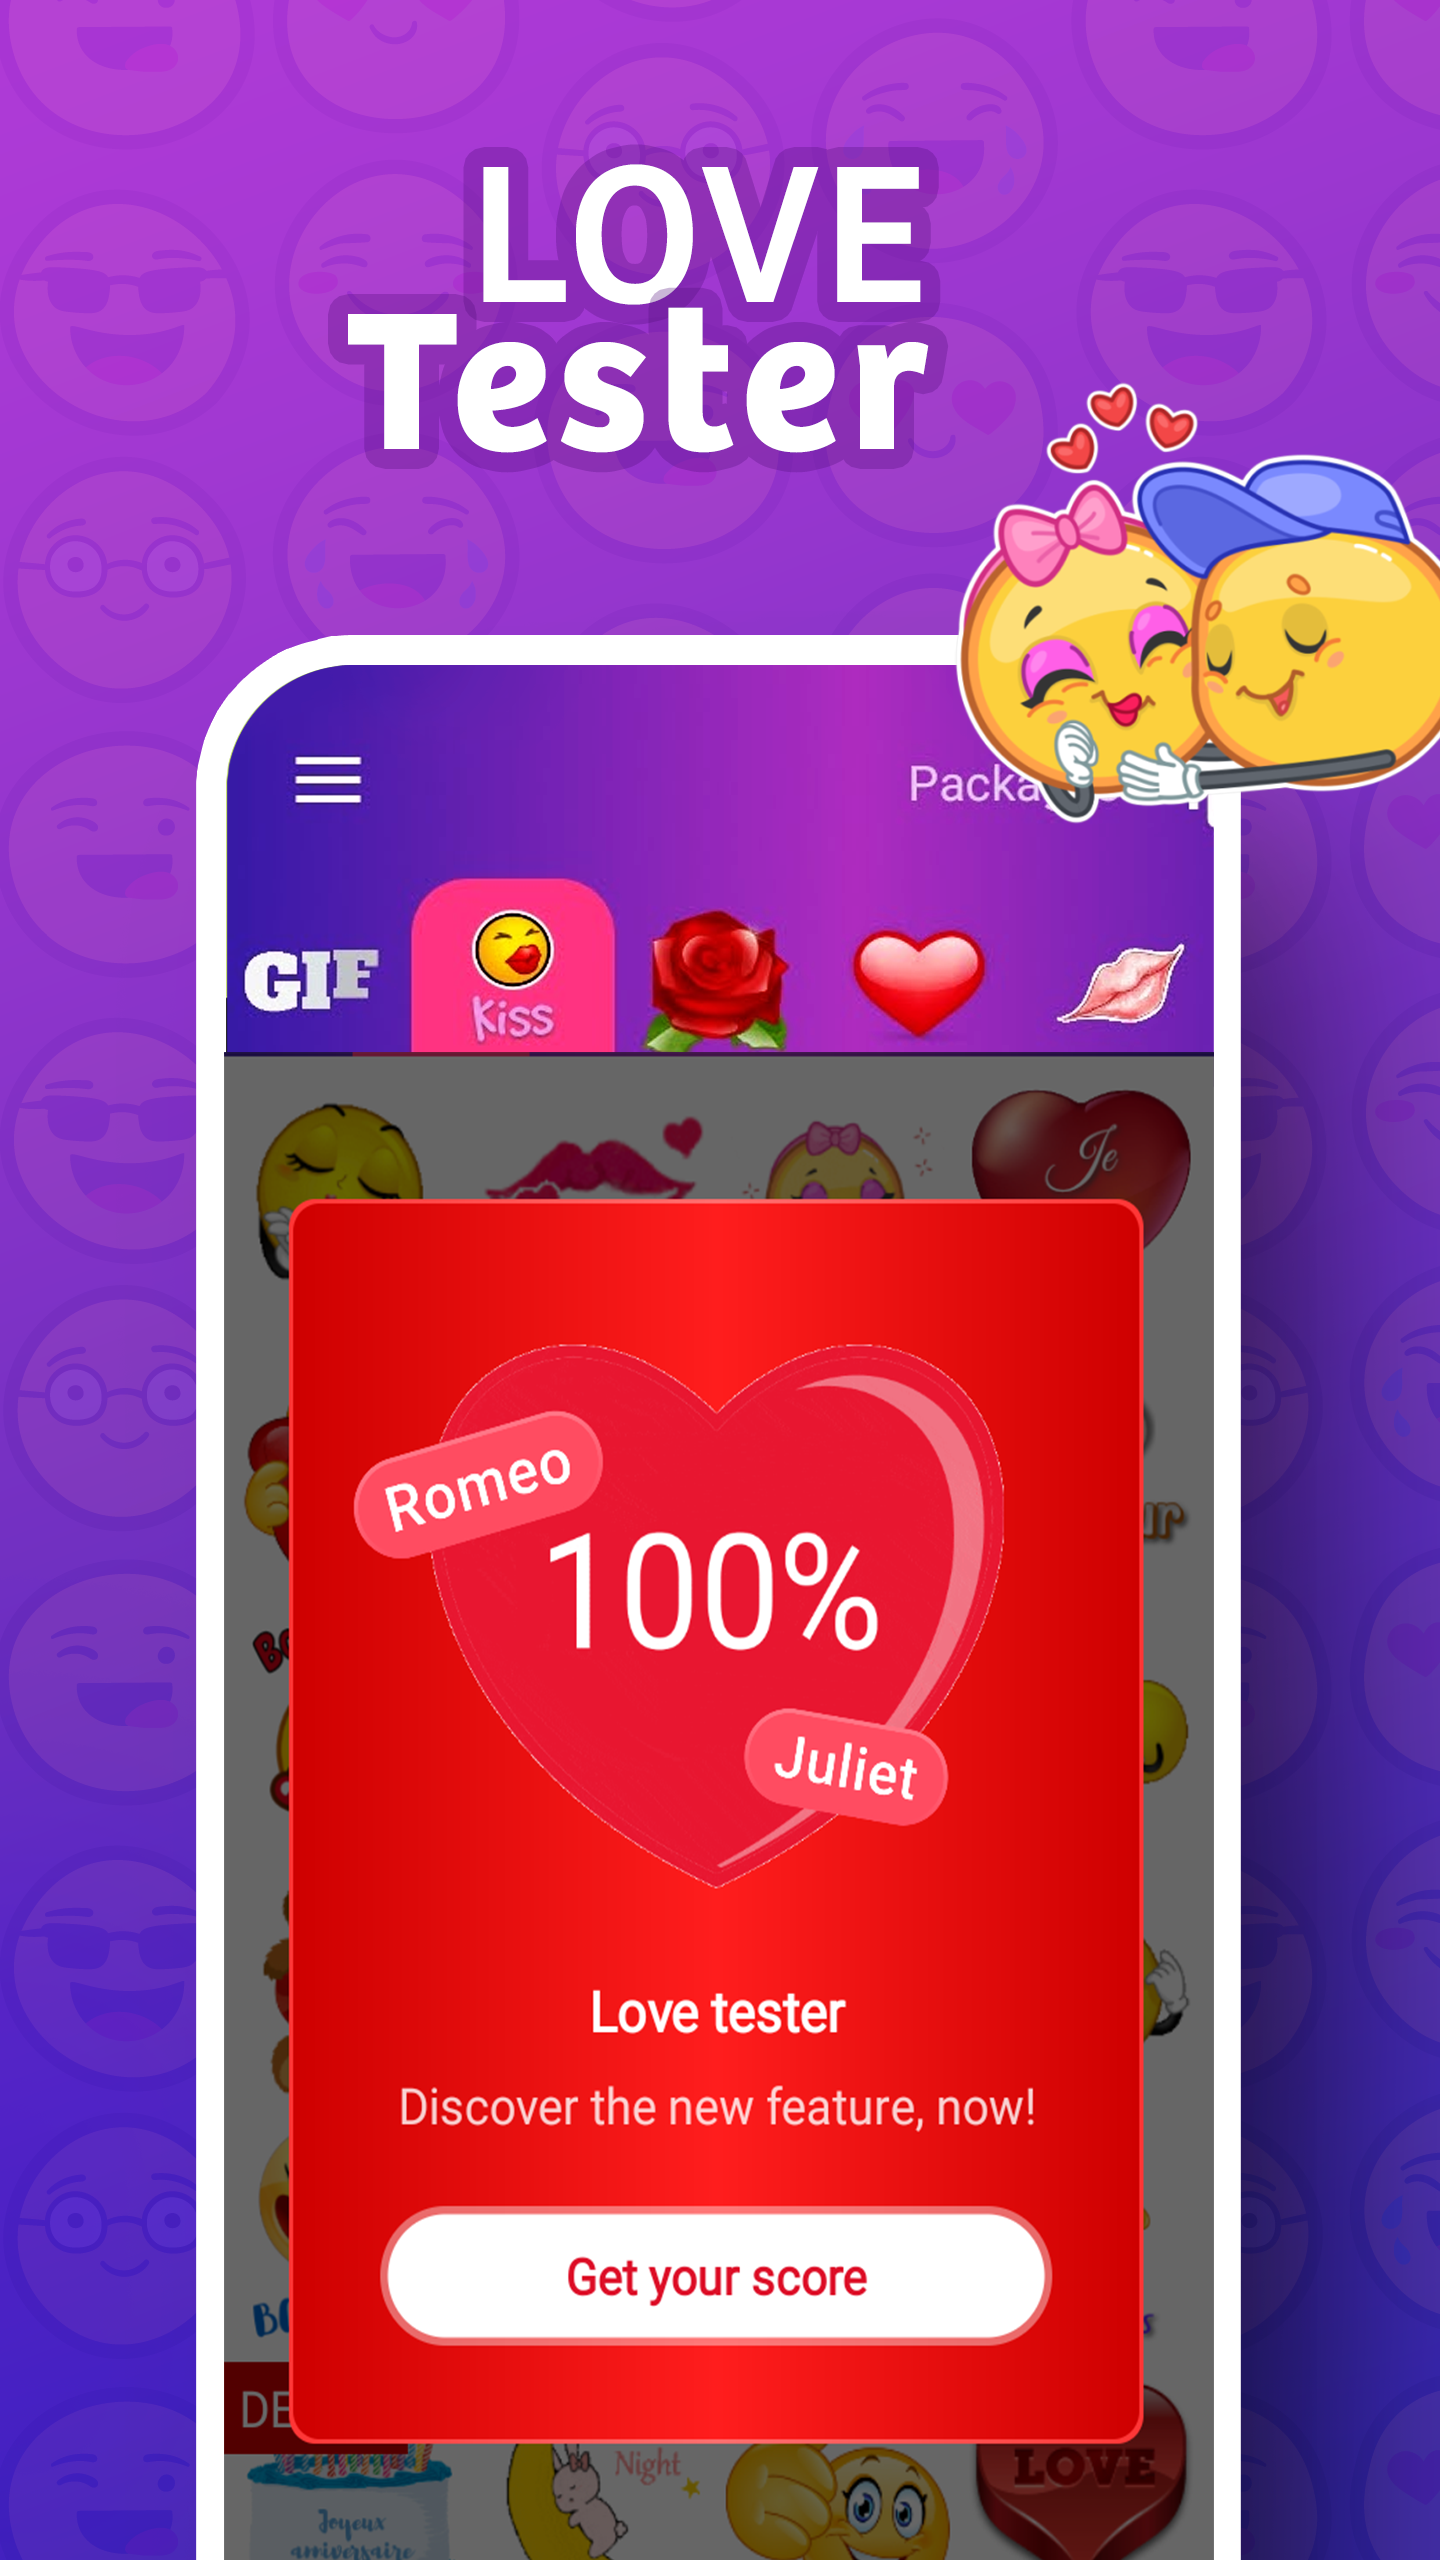 Android application WhatsLov: Love Emoji WASticker screenshort